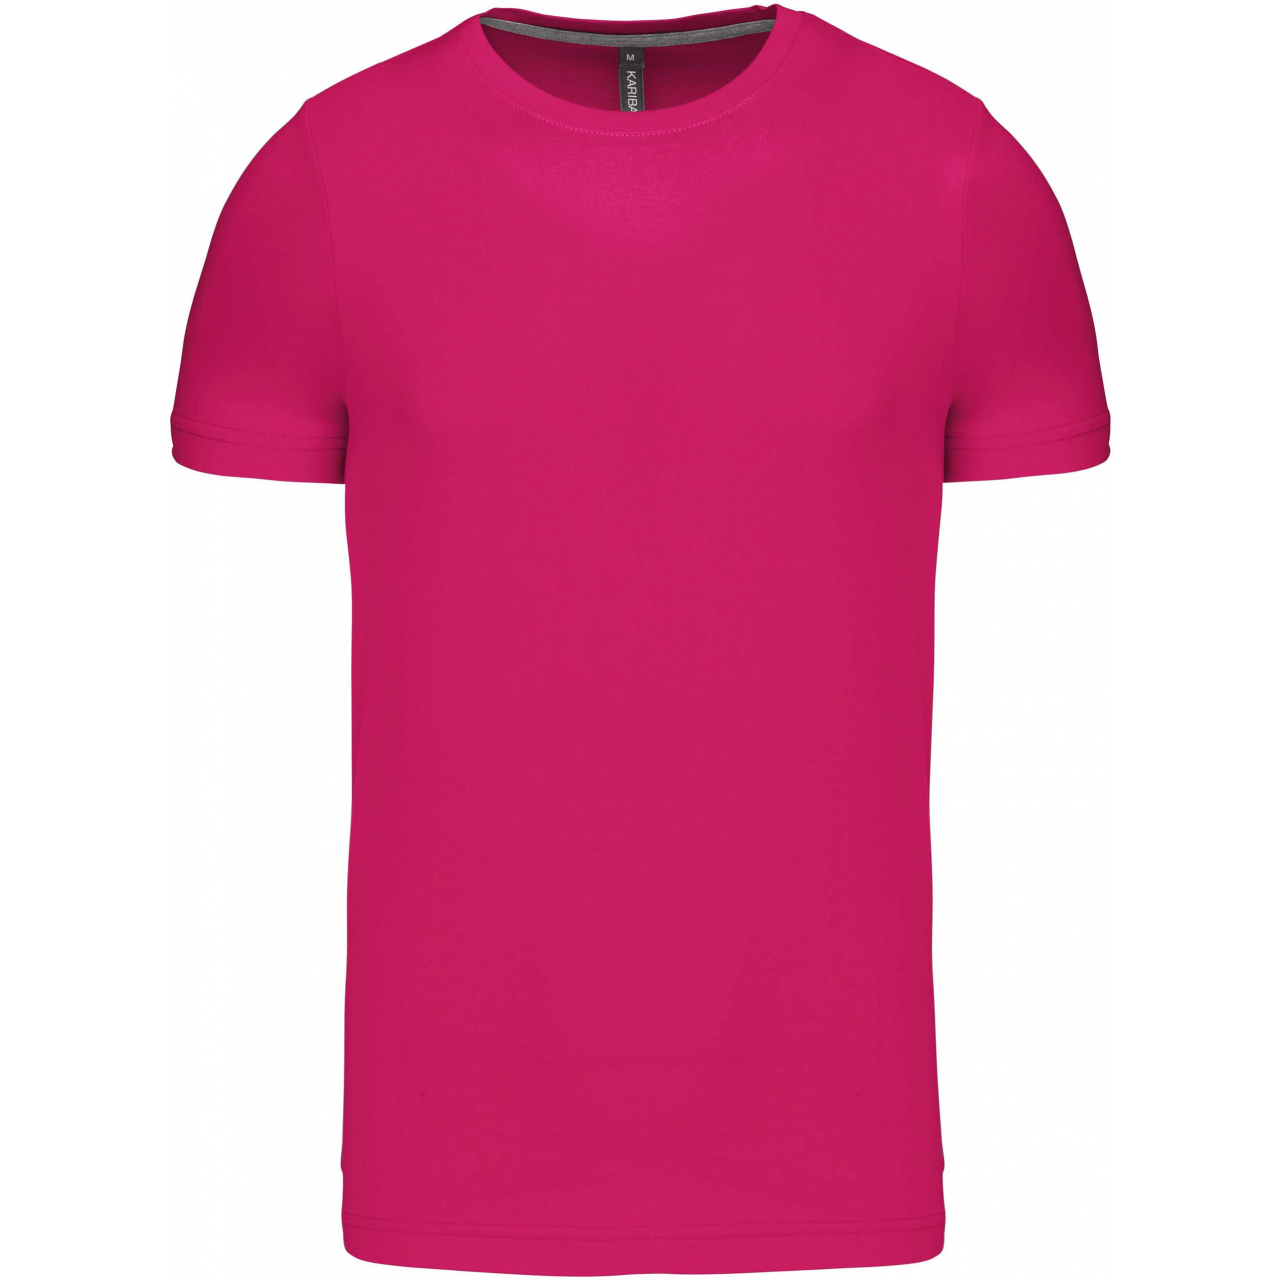 Pánské tričko Kariban krátký rukáv - růžové, XL